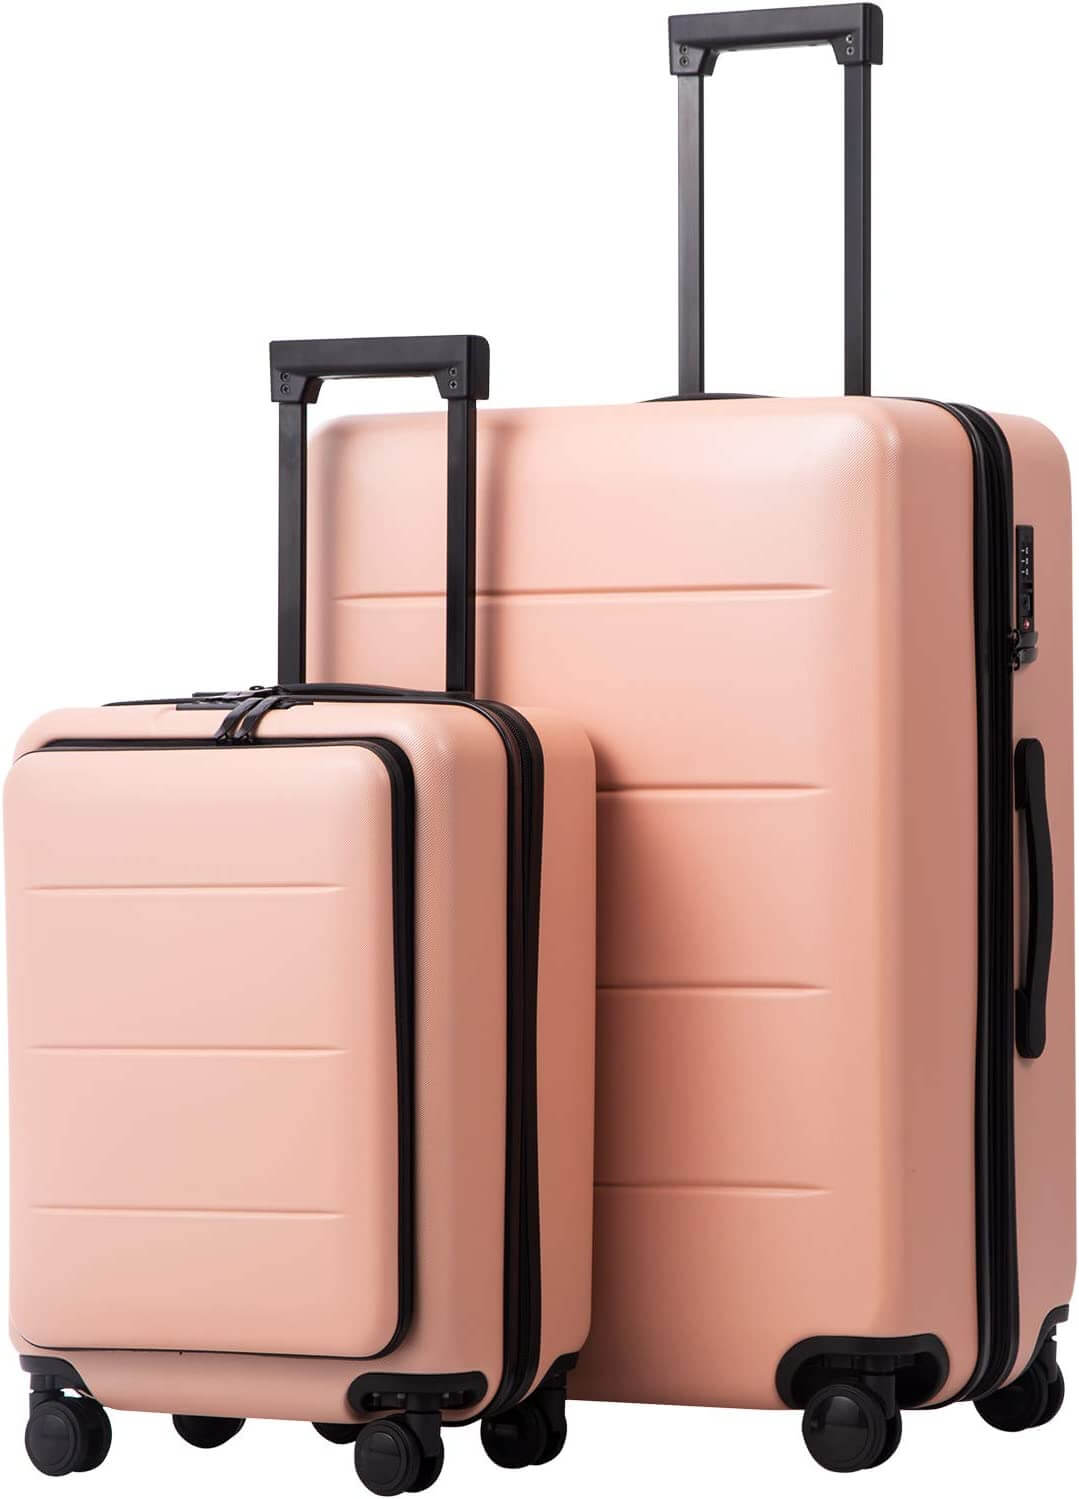 Coolife 2-Piece Luggage Set